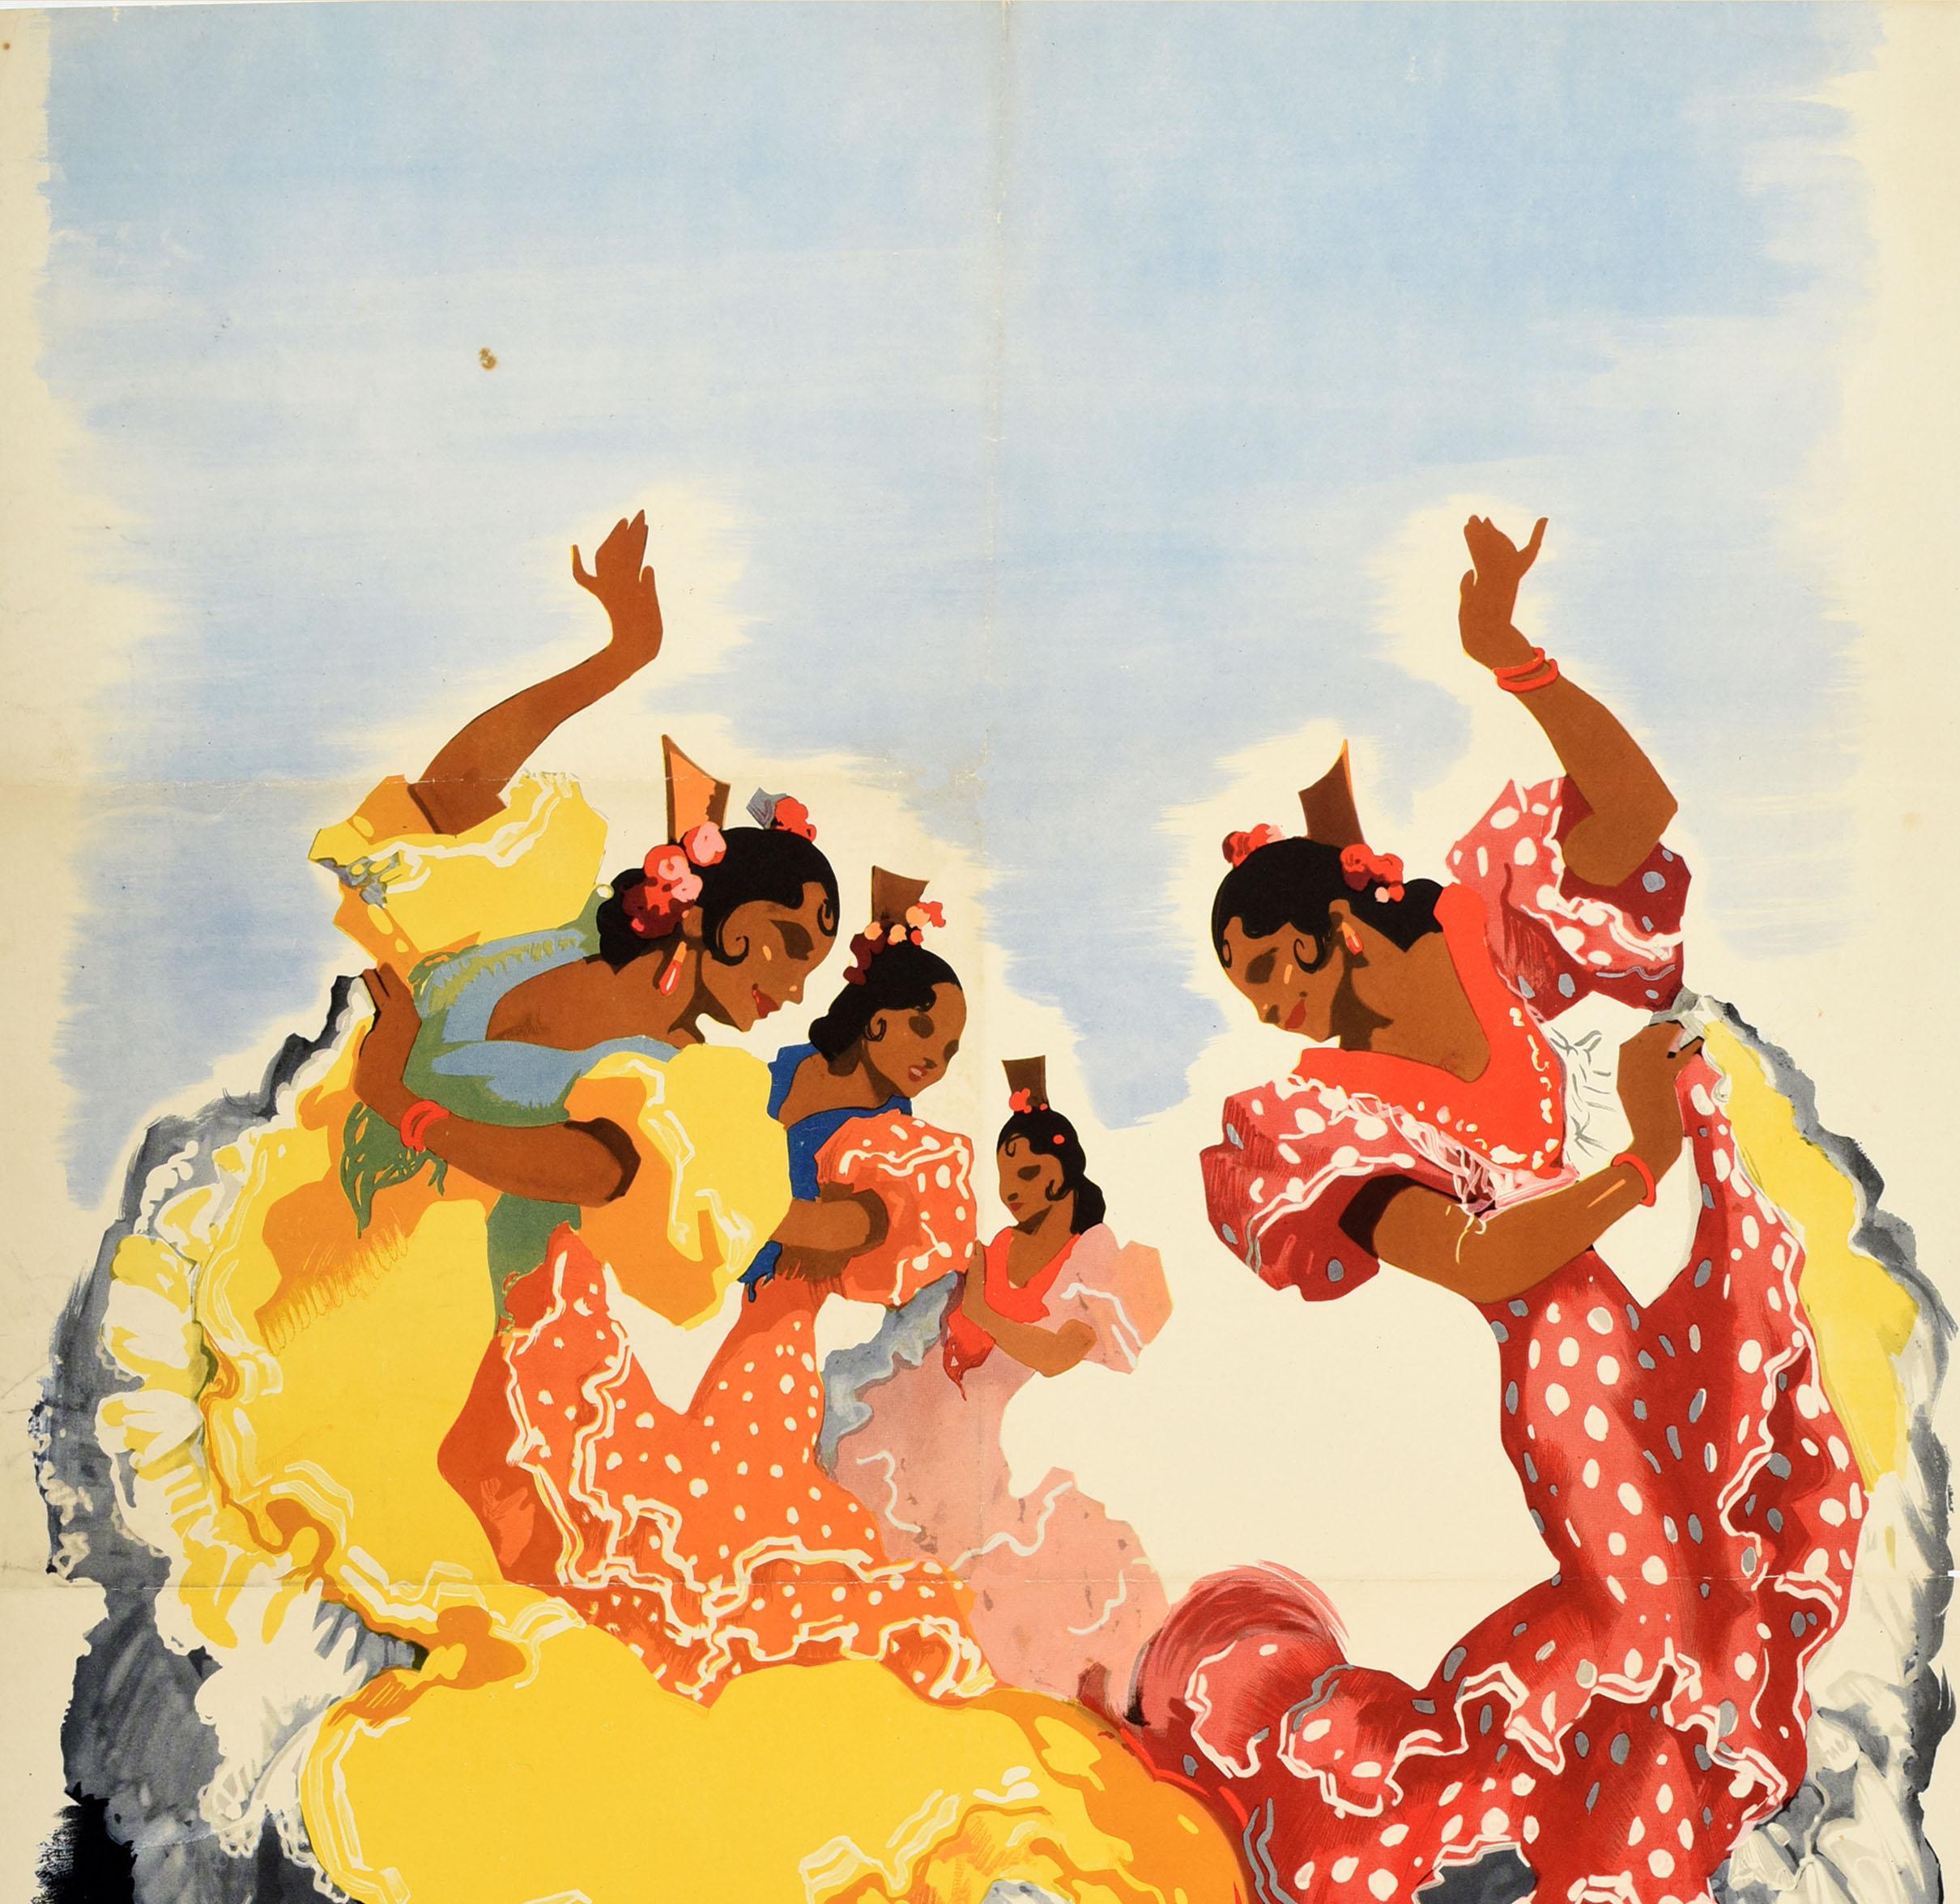 Spanish Original Vintage Travel Poster Spain Flamenco Dancers Jose Morell Art Design